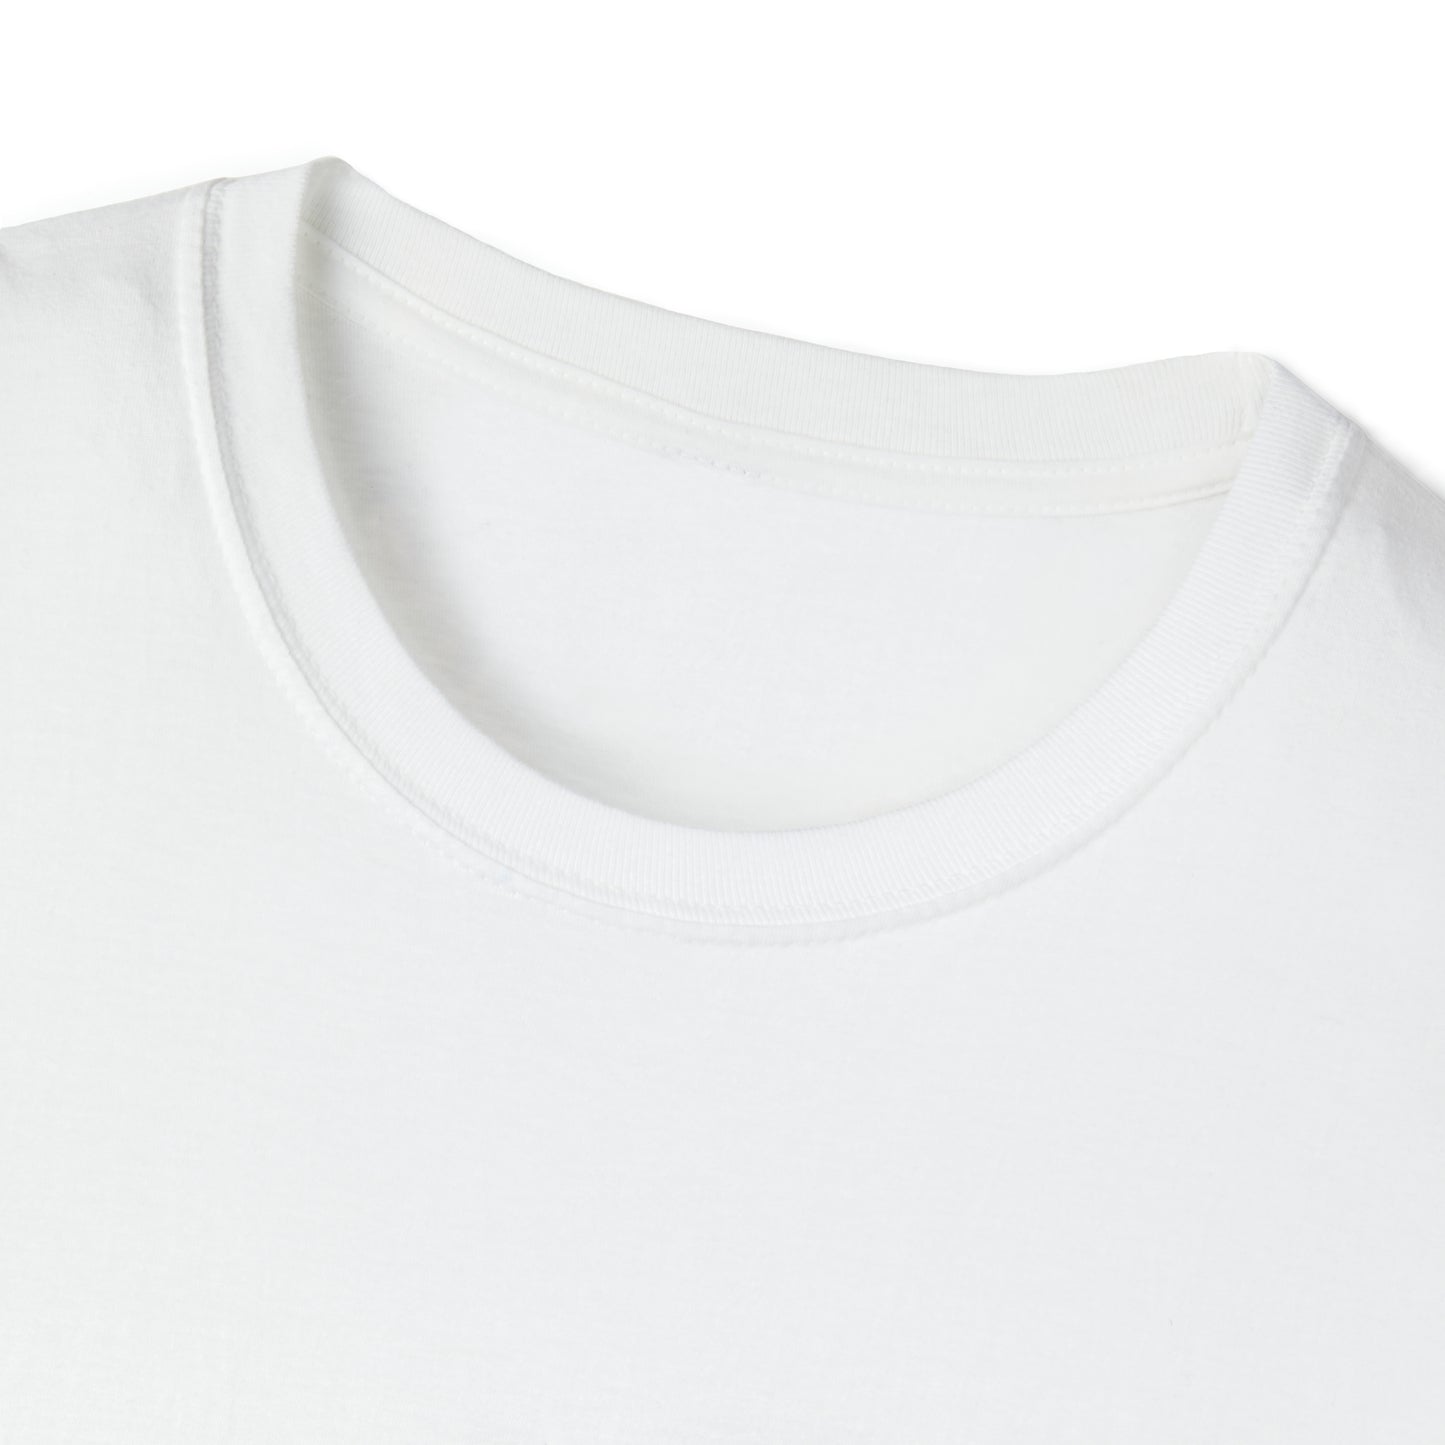 MANEATER GREAT WHITE SHARK Sealife Hot Rod Unisex Softstyle T-Shirt